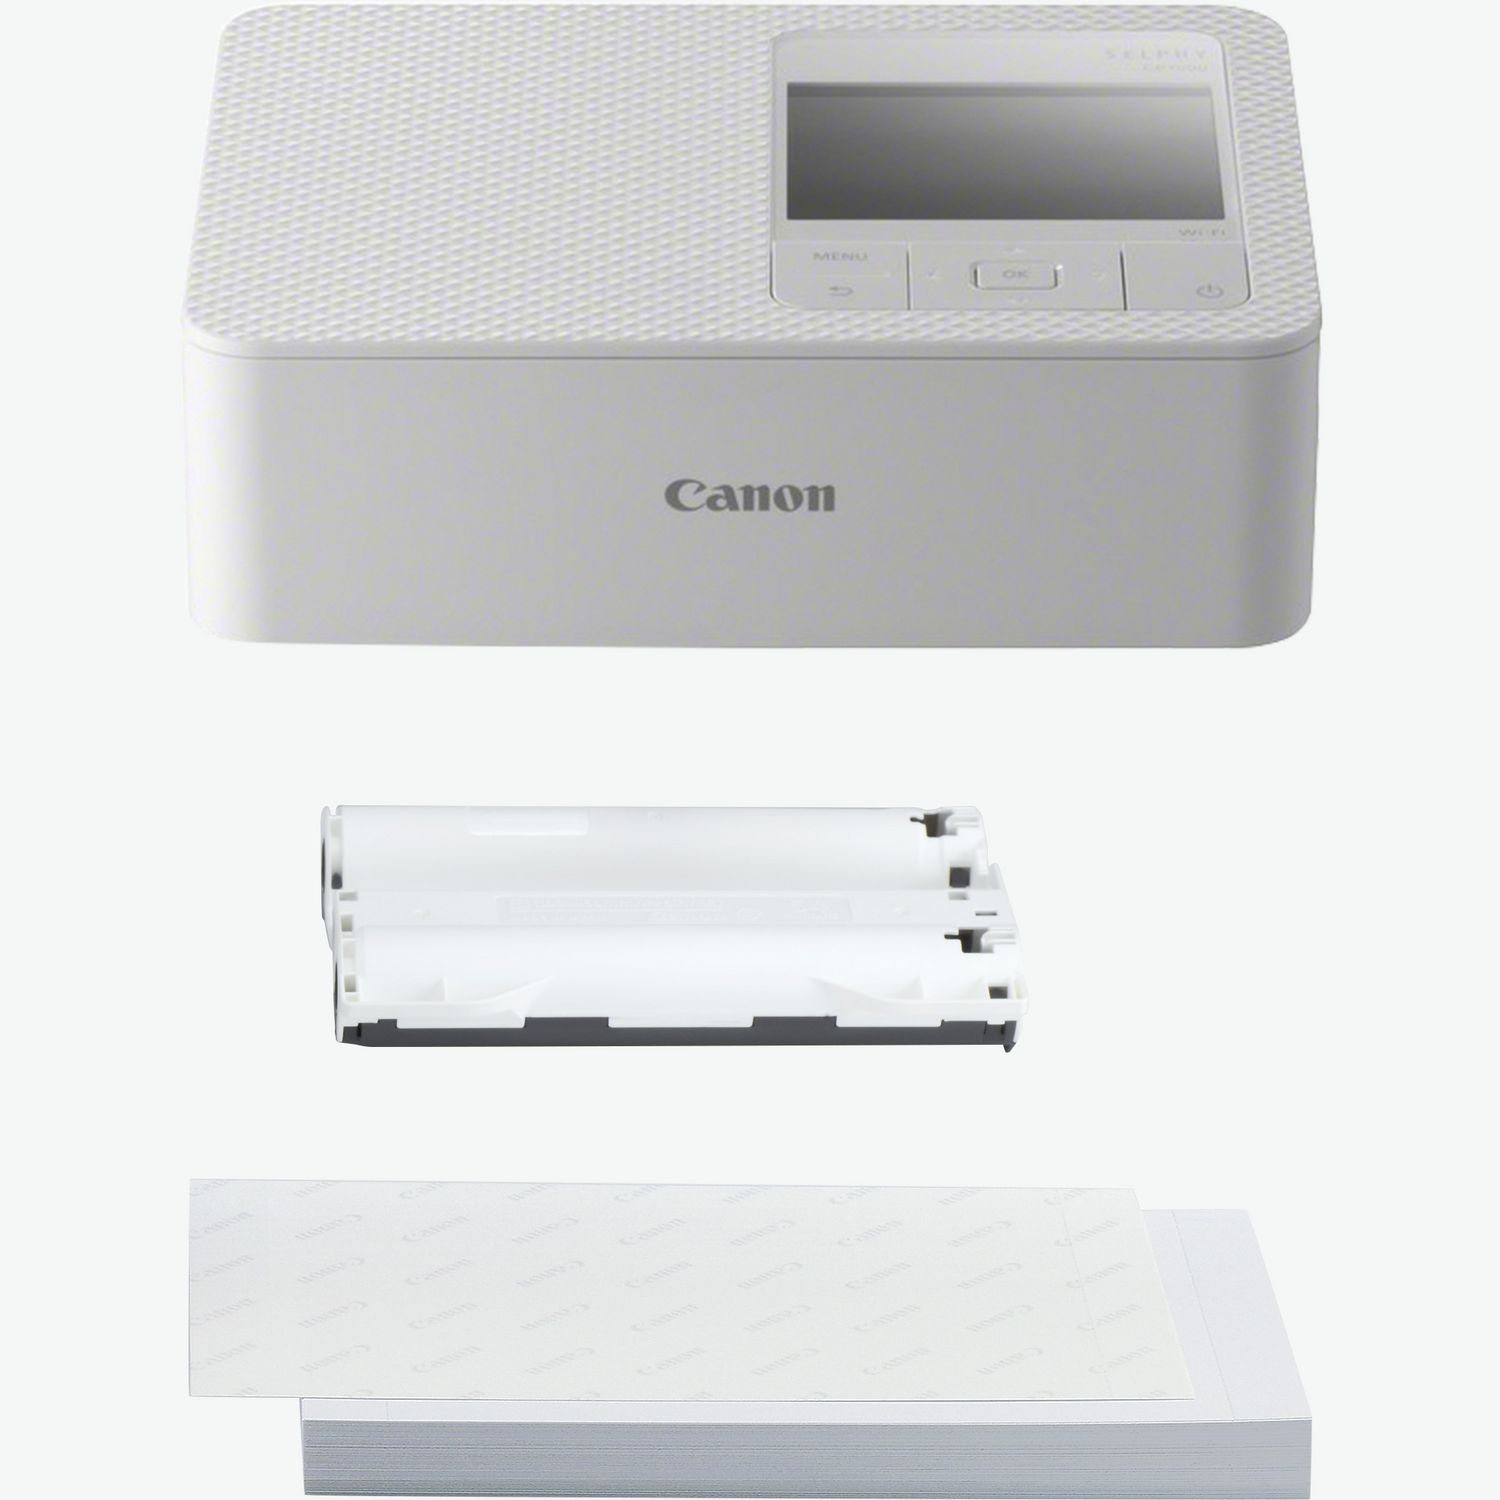 Canon : Manual del producto : SELPHY CP1500 : Impresión desde Windows